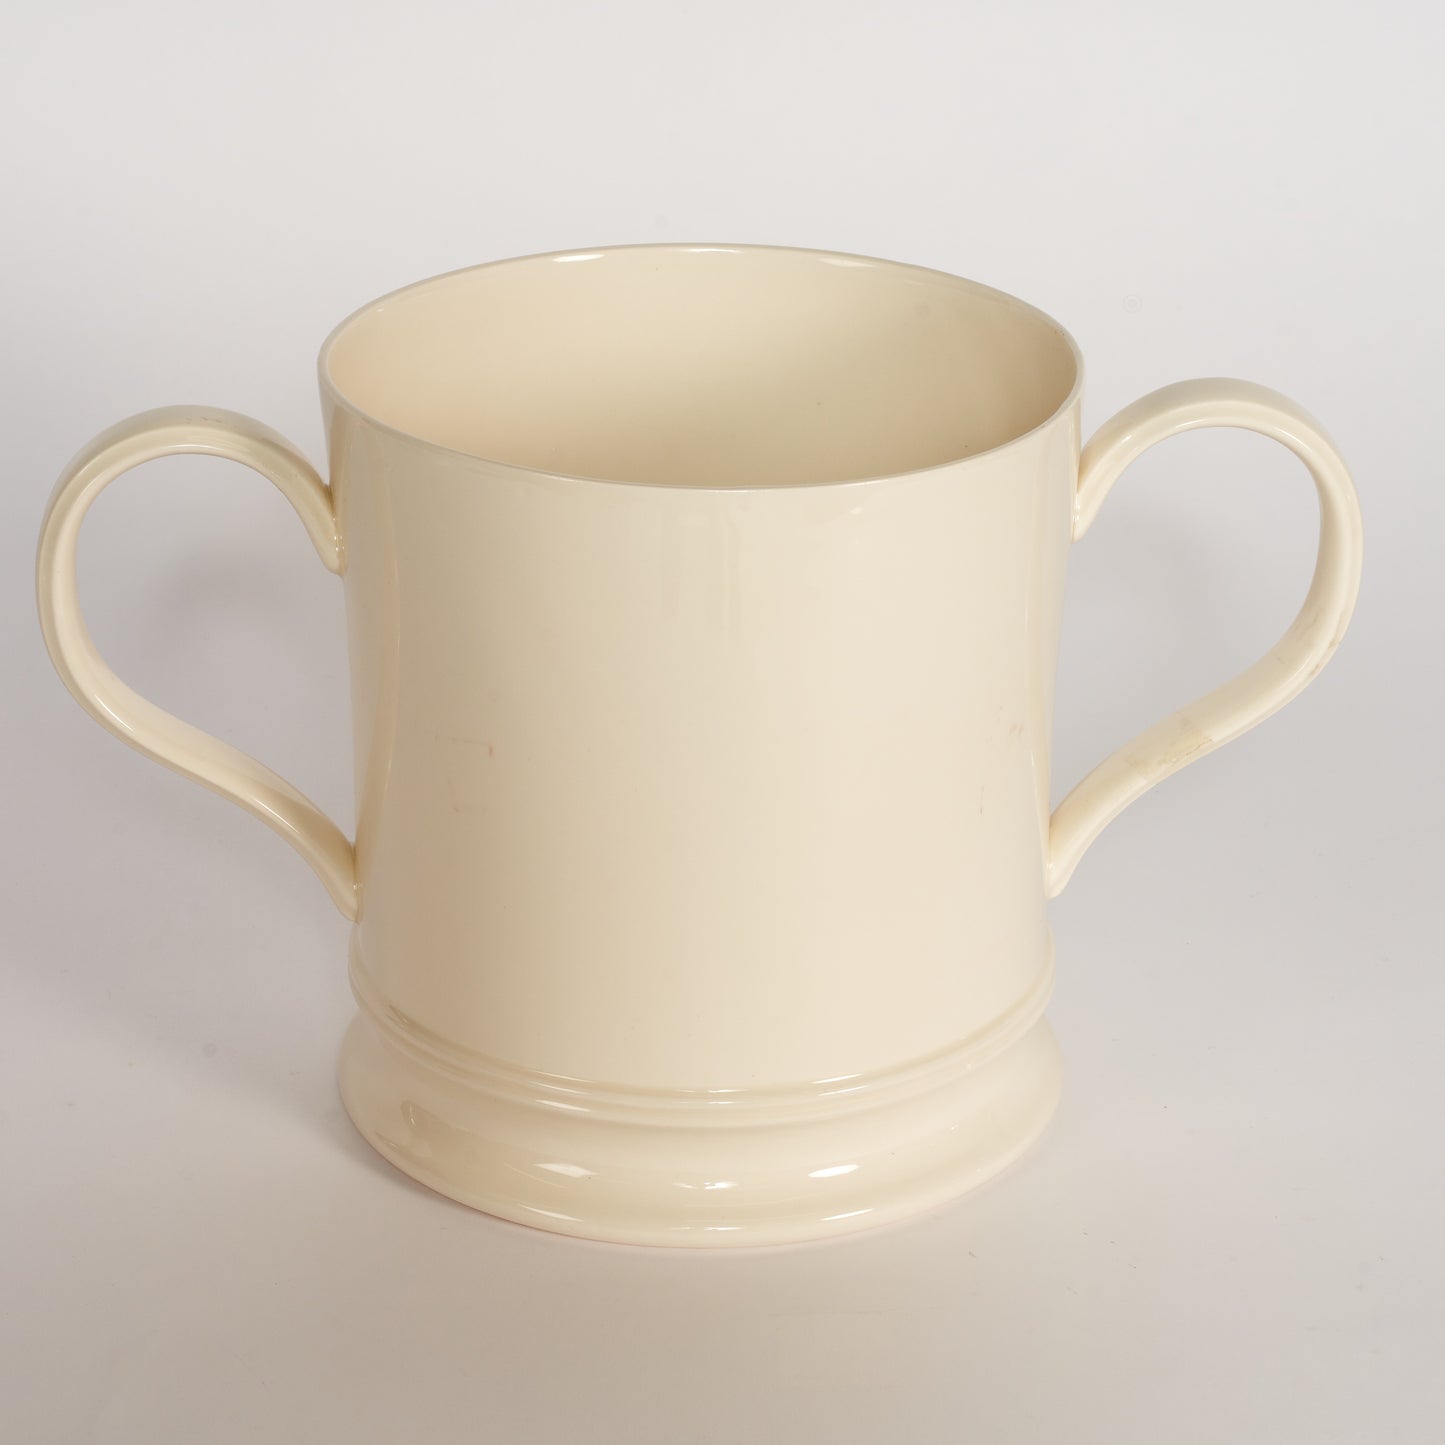 P&H Creamware Loving Cup